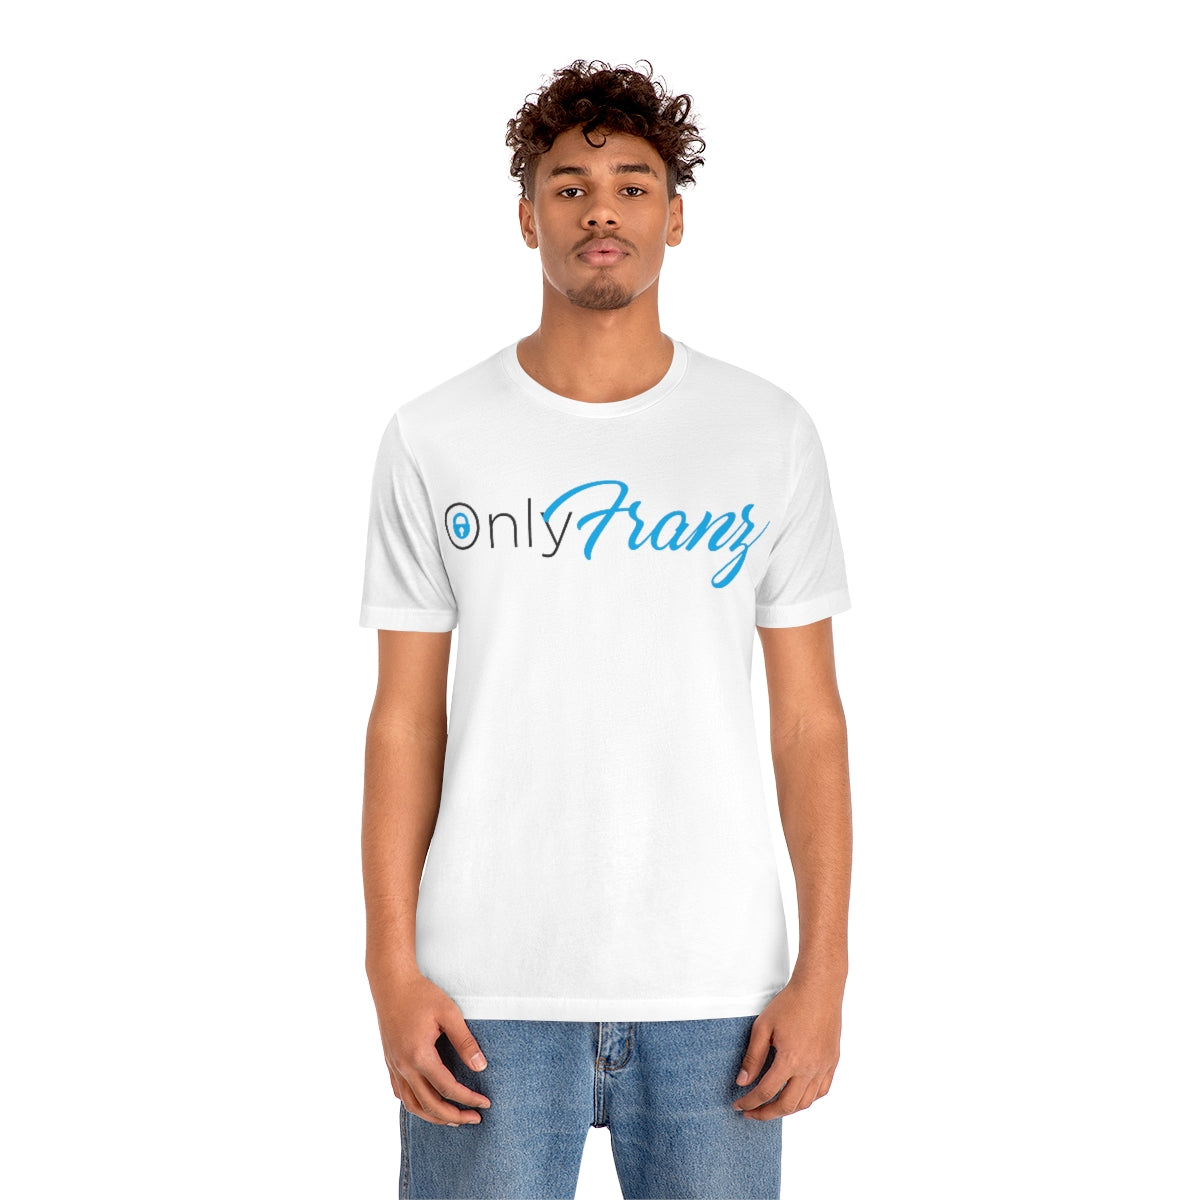 Only Franz - Orlando Magic Tee | Orlando Shirts | Orlando Shirts